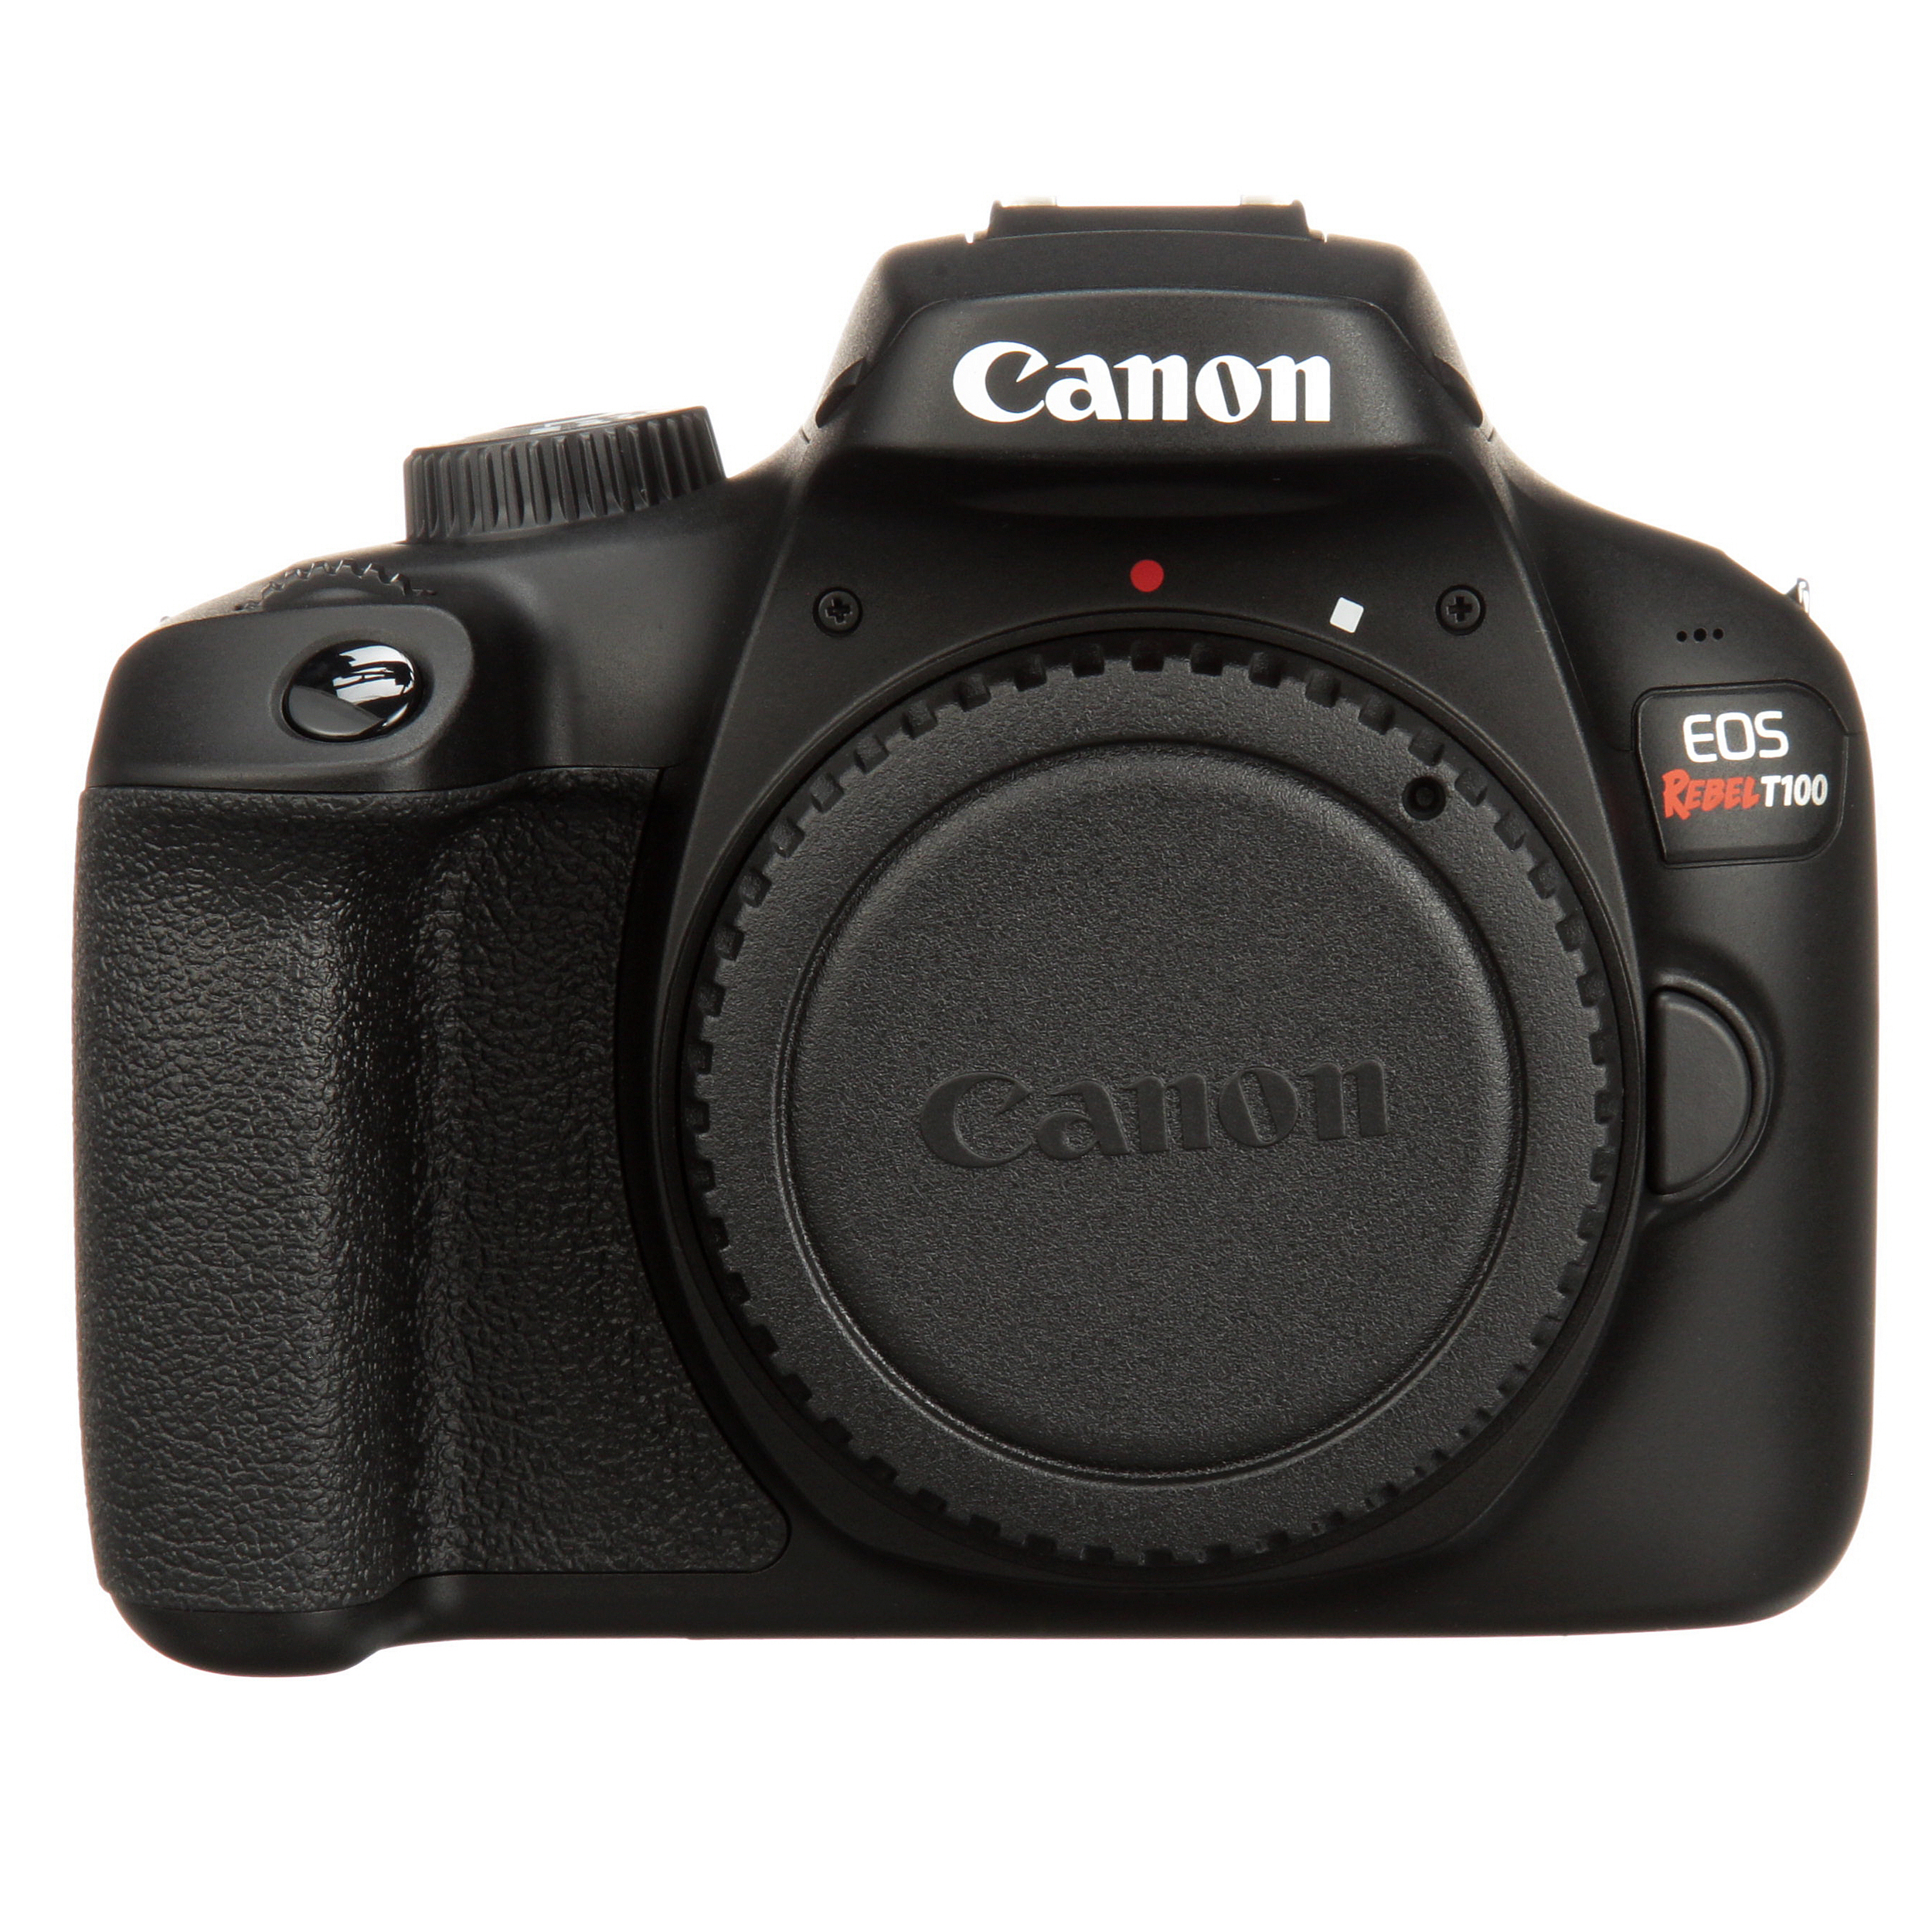 Canon EOS Rebel T100 Digital SLR Camera with 18-55mm Lens Kit, 18 Megapixel Sensor, Wi-Fi, DIGIC4+, SanDisk 32GB Memory Card and Live View Shooting - image 3 of 8